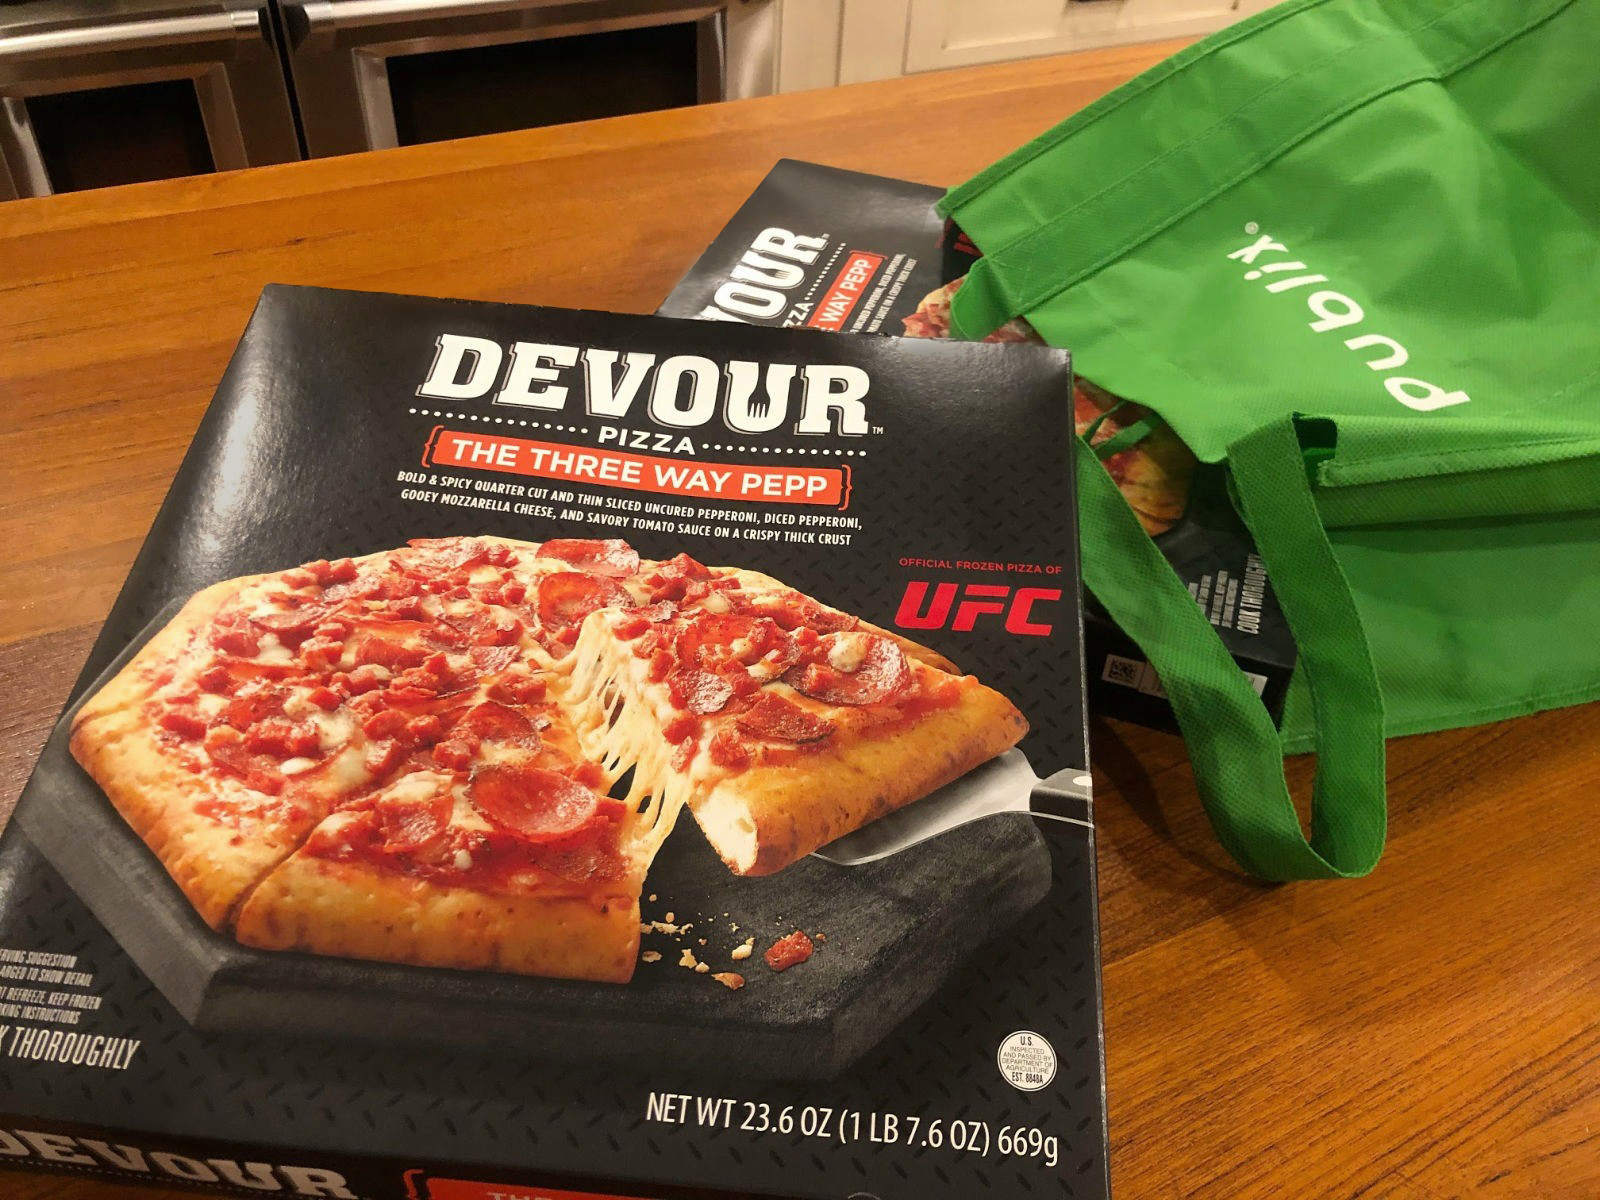 Get Big Savings On New DEVOUR Pizza - Save $2 At Publix on I Heart Publix 2